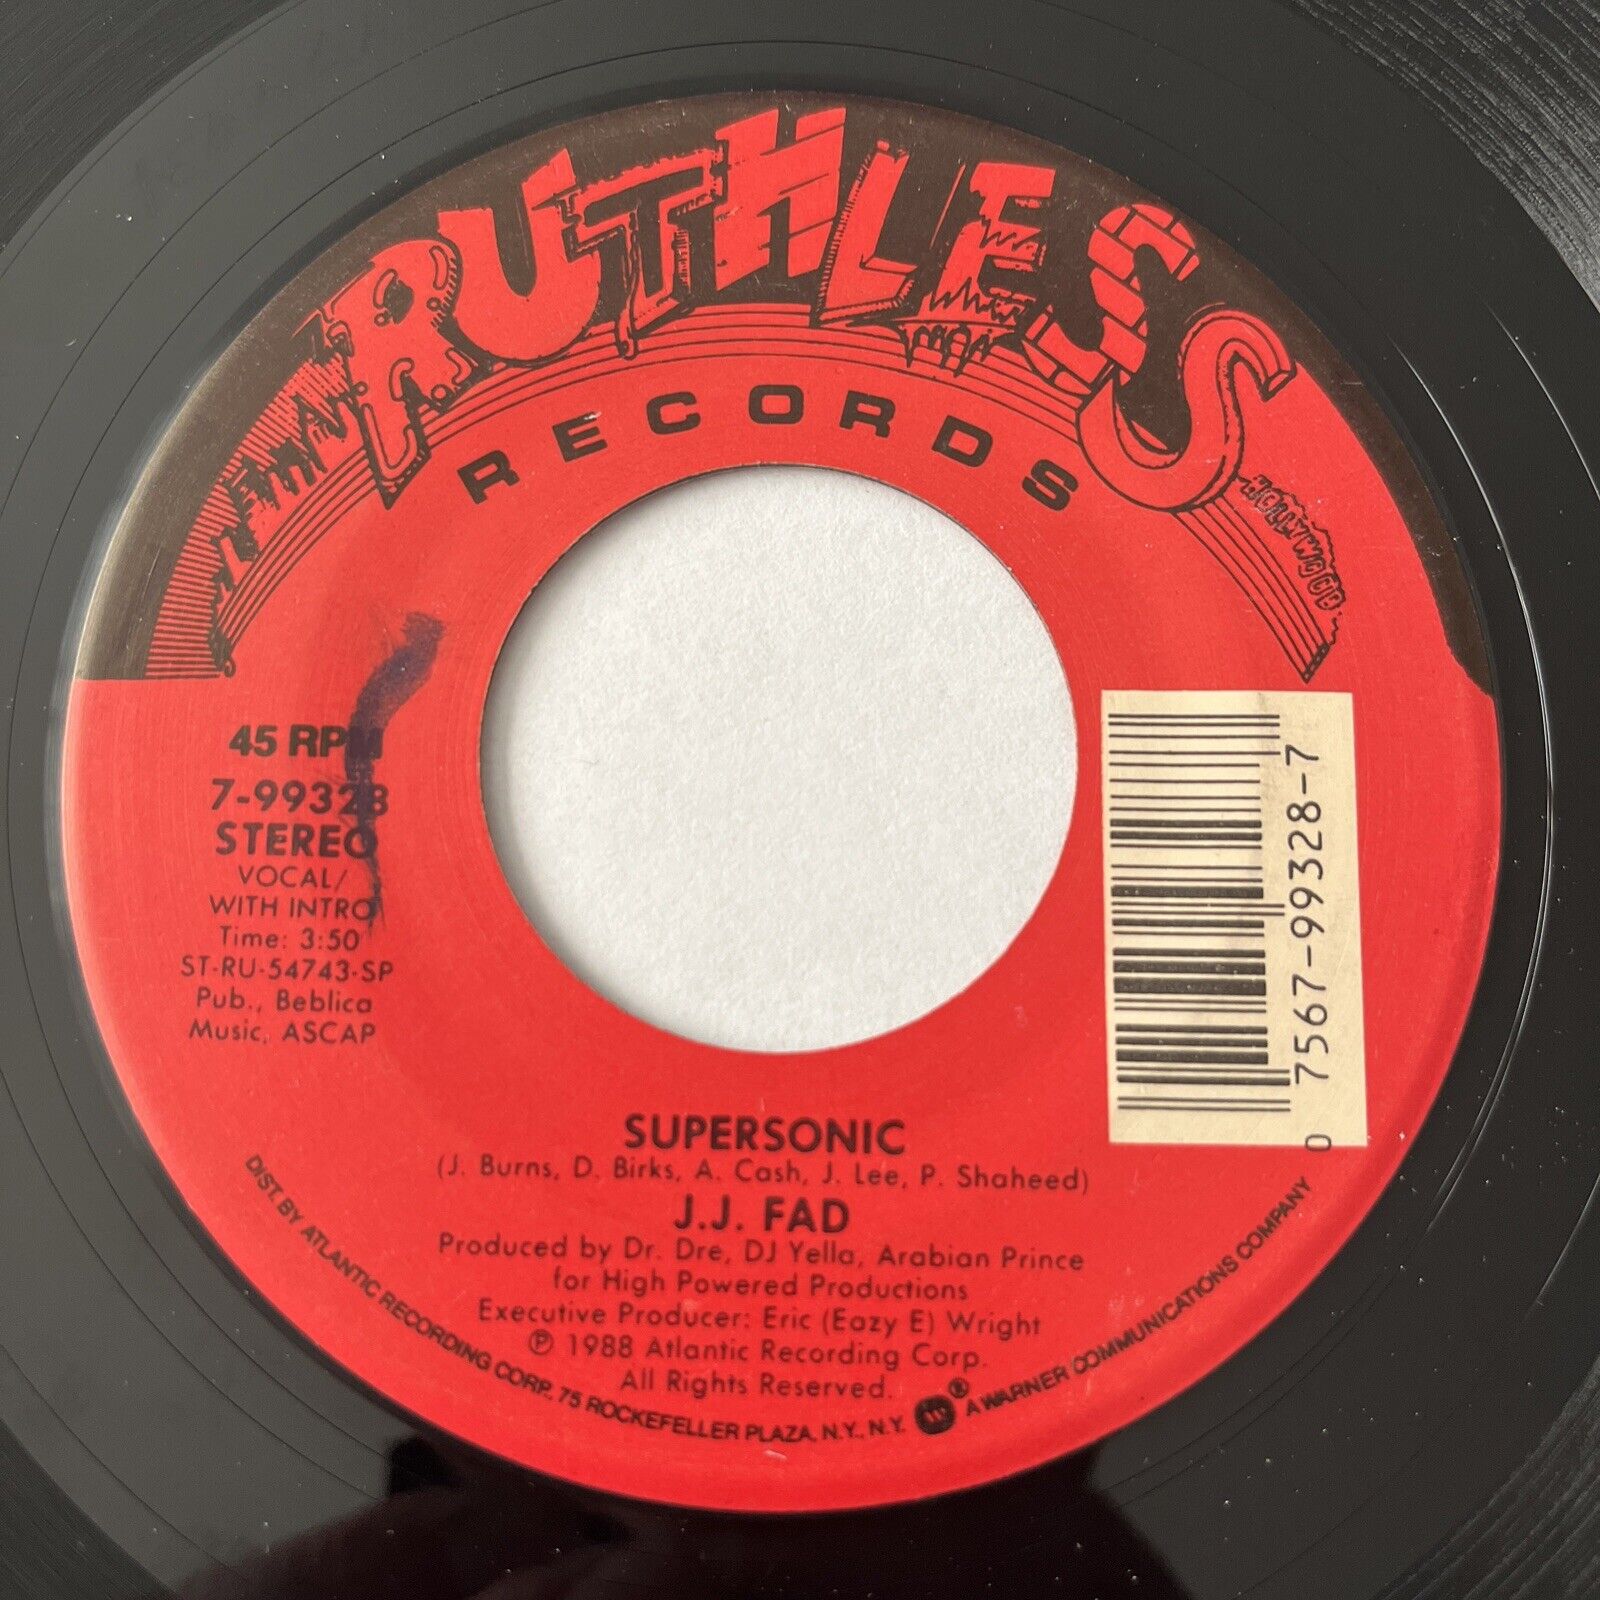 J.J. FAD - SUPERSONIC - Ruthless Records Old school rap 45 rpm Single